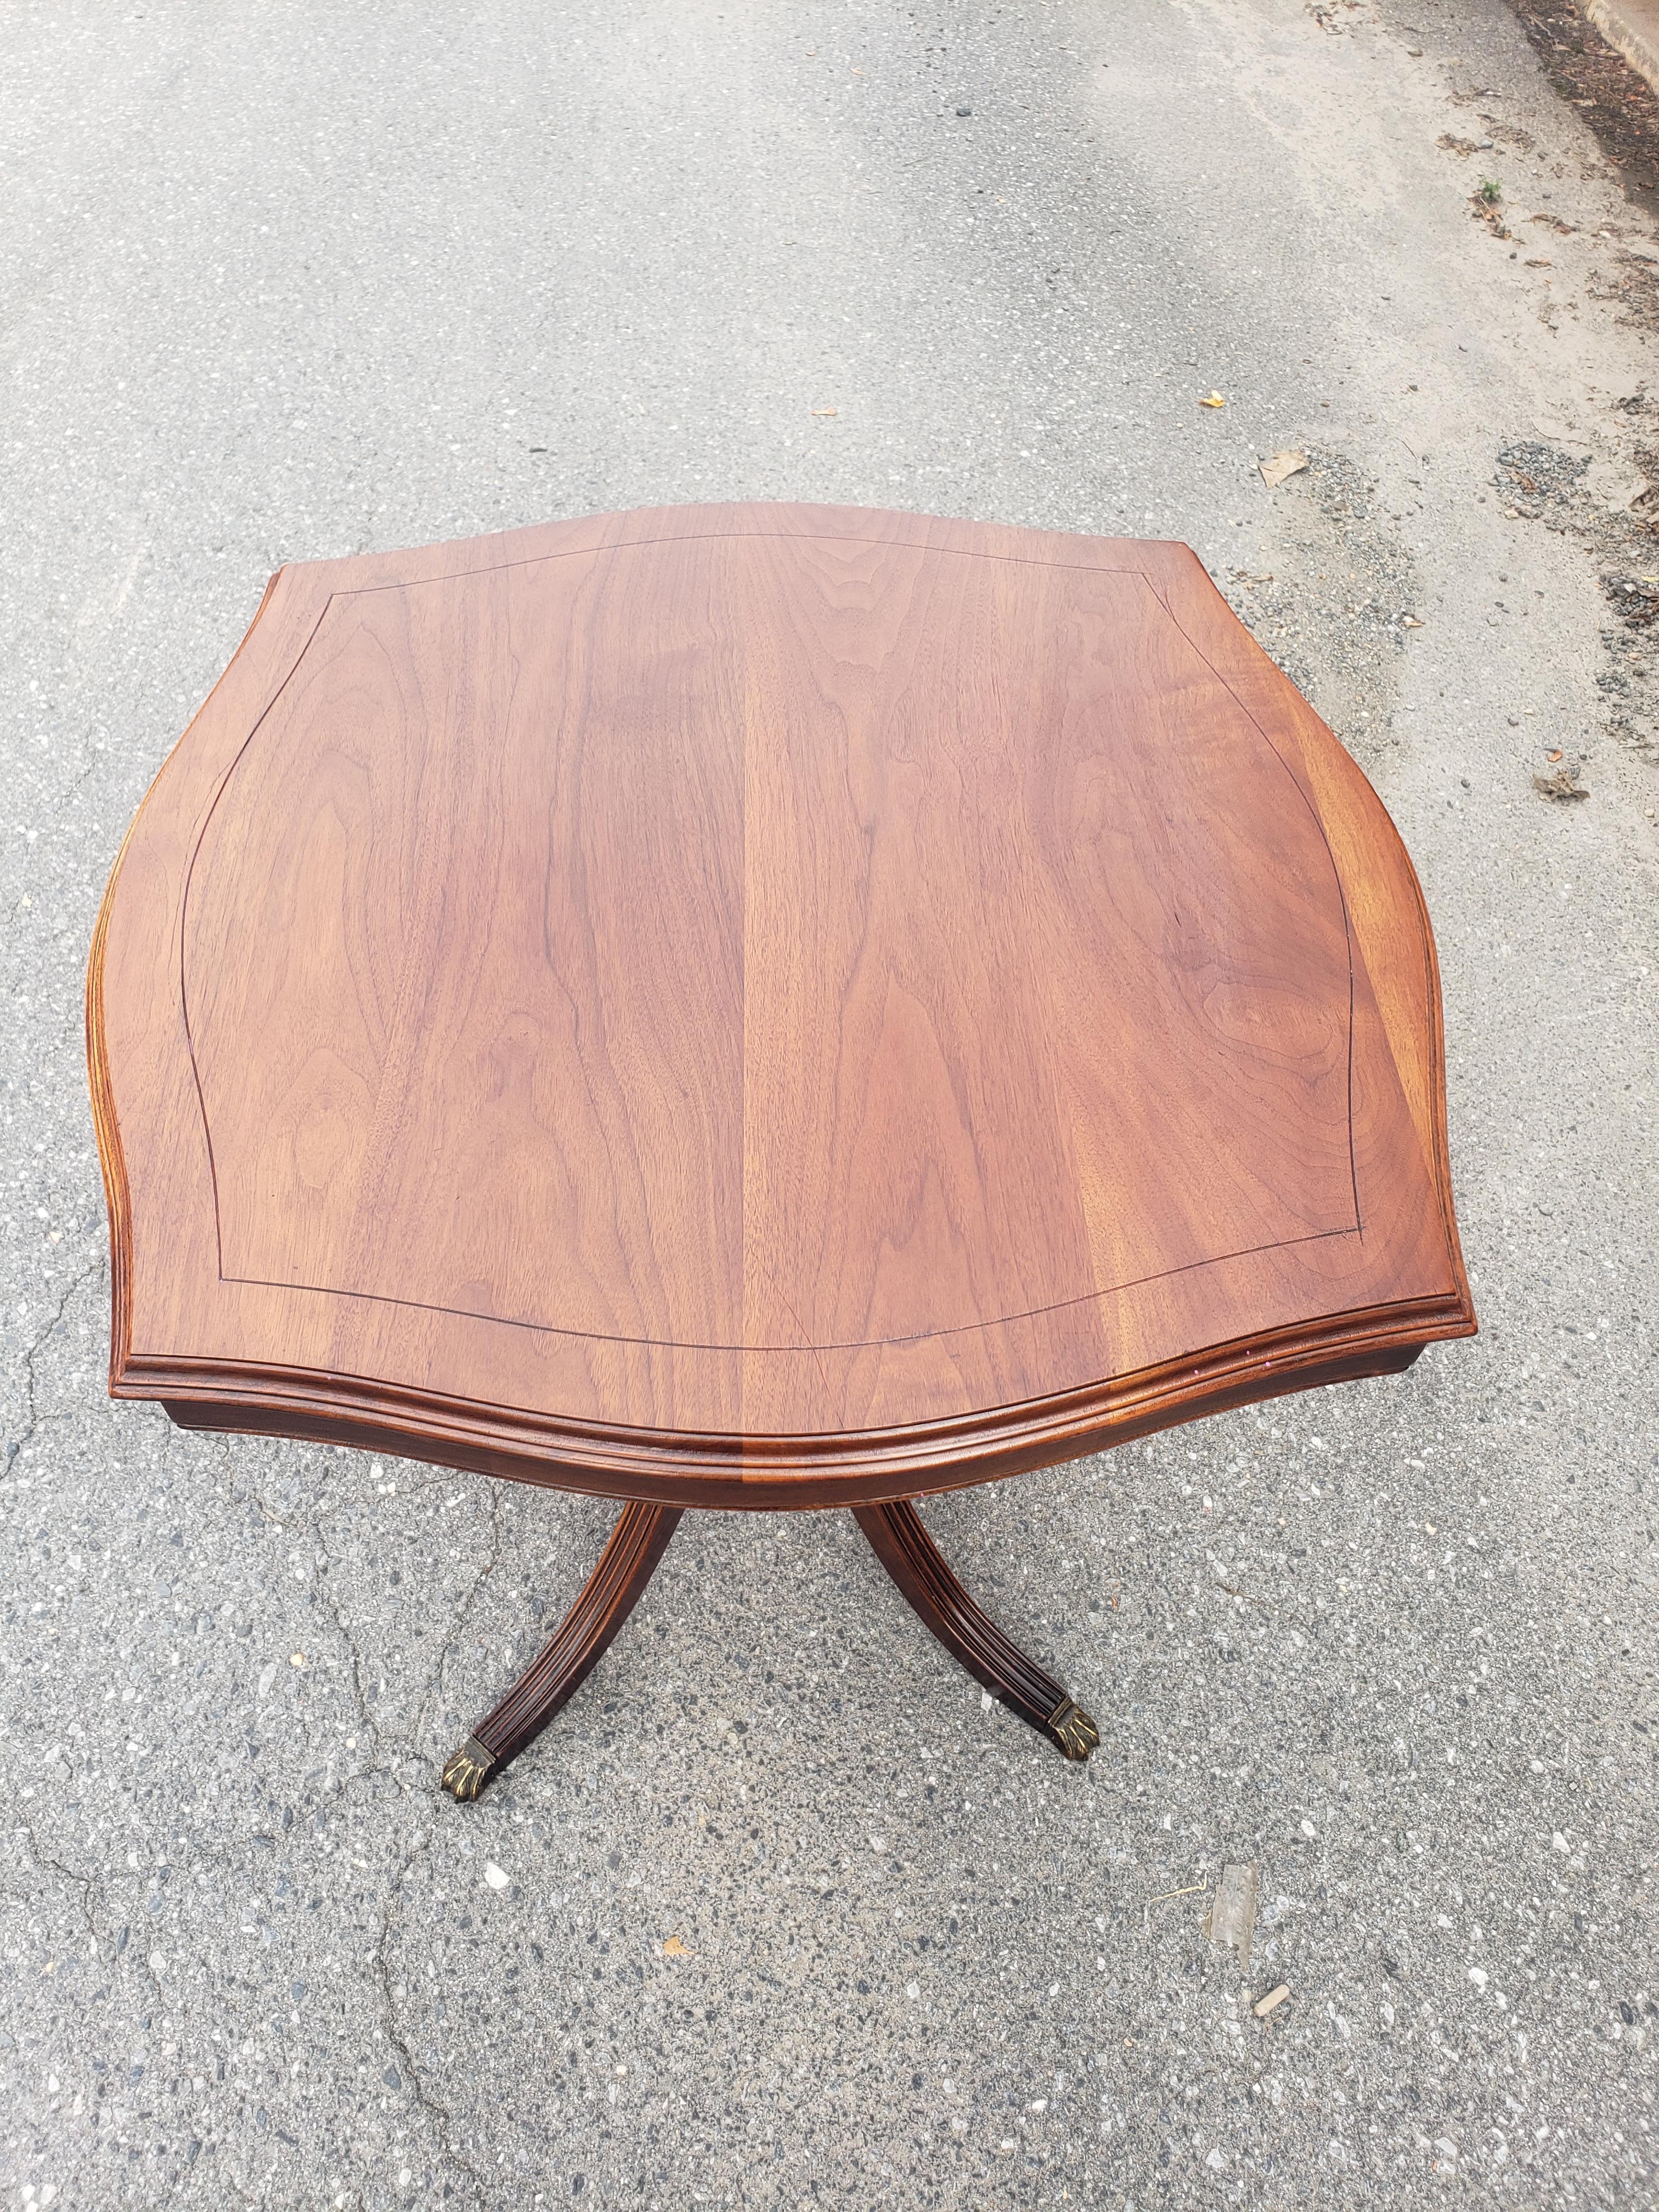 Mid-Century Refinished Solid Walnut Pedestal Quadpod Tea Table w Brass Paw Feet For Sale 1